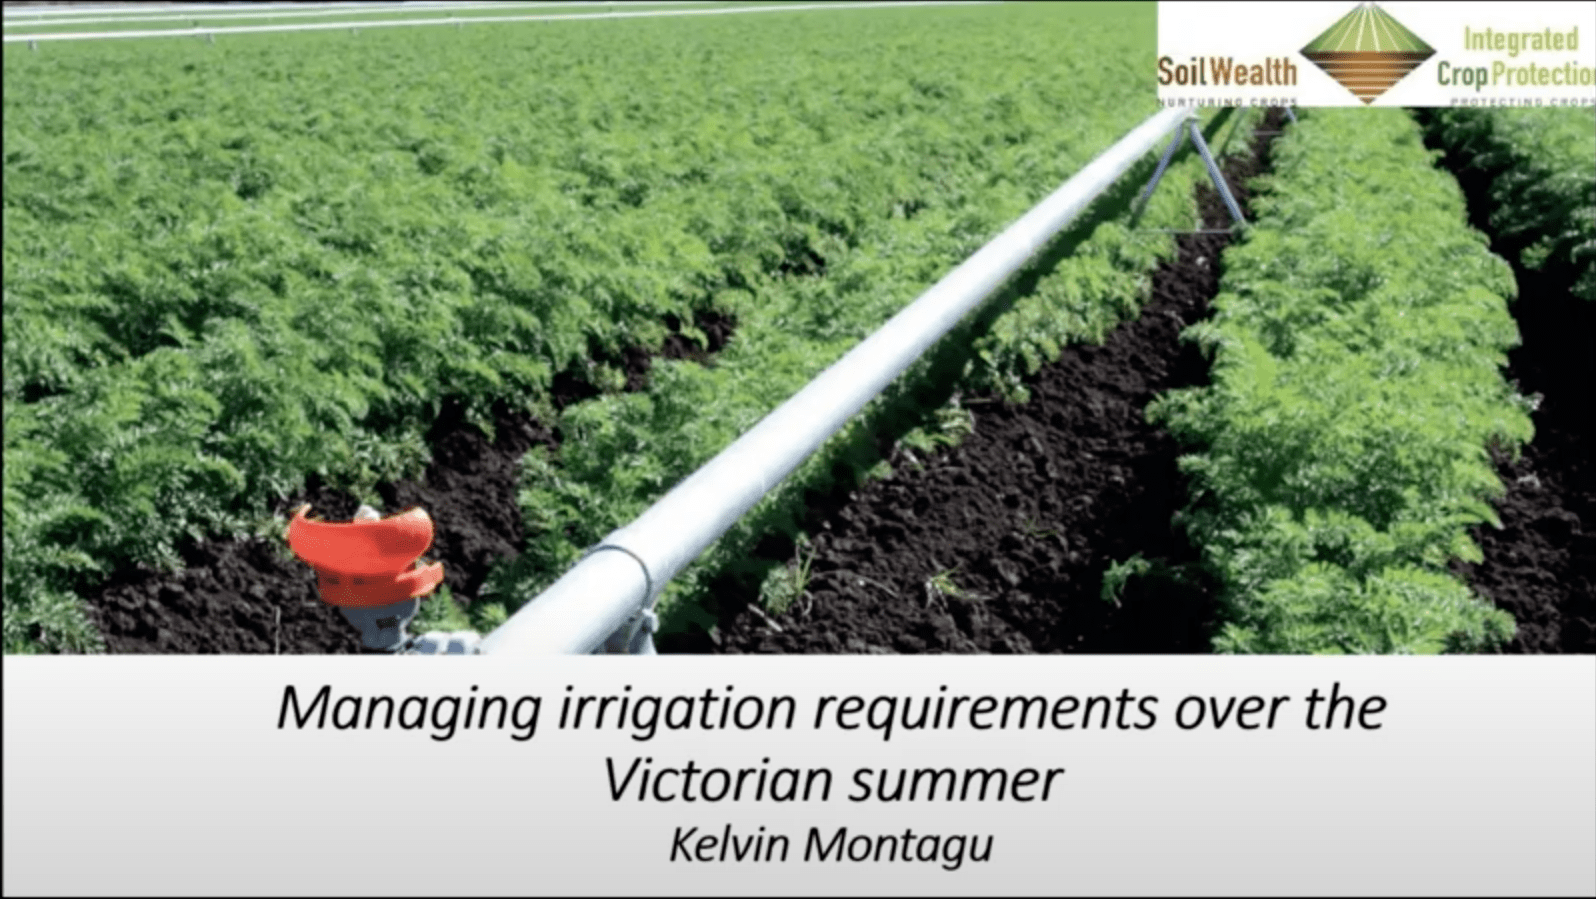 Managing irrigation requirements using soil moisture monitoring